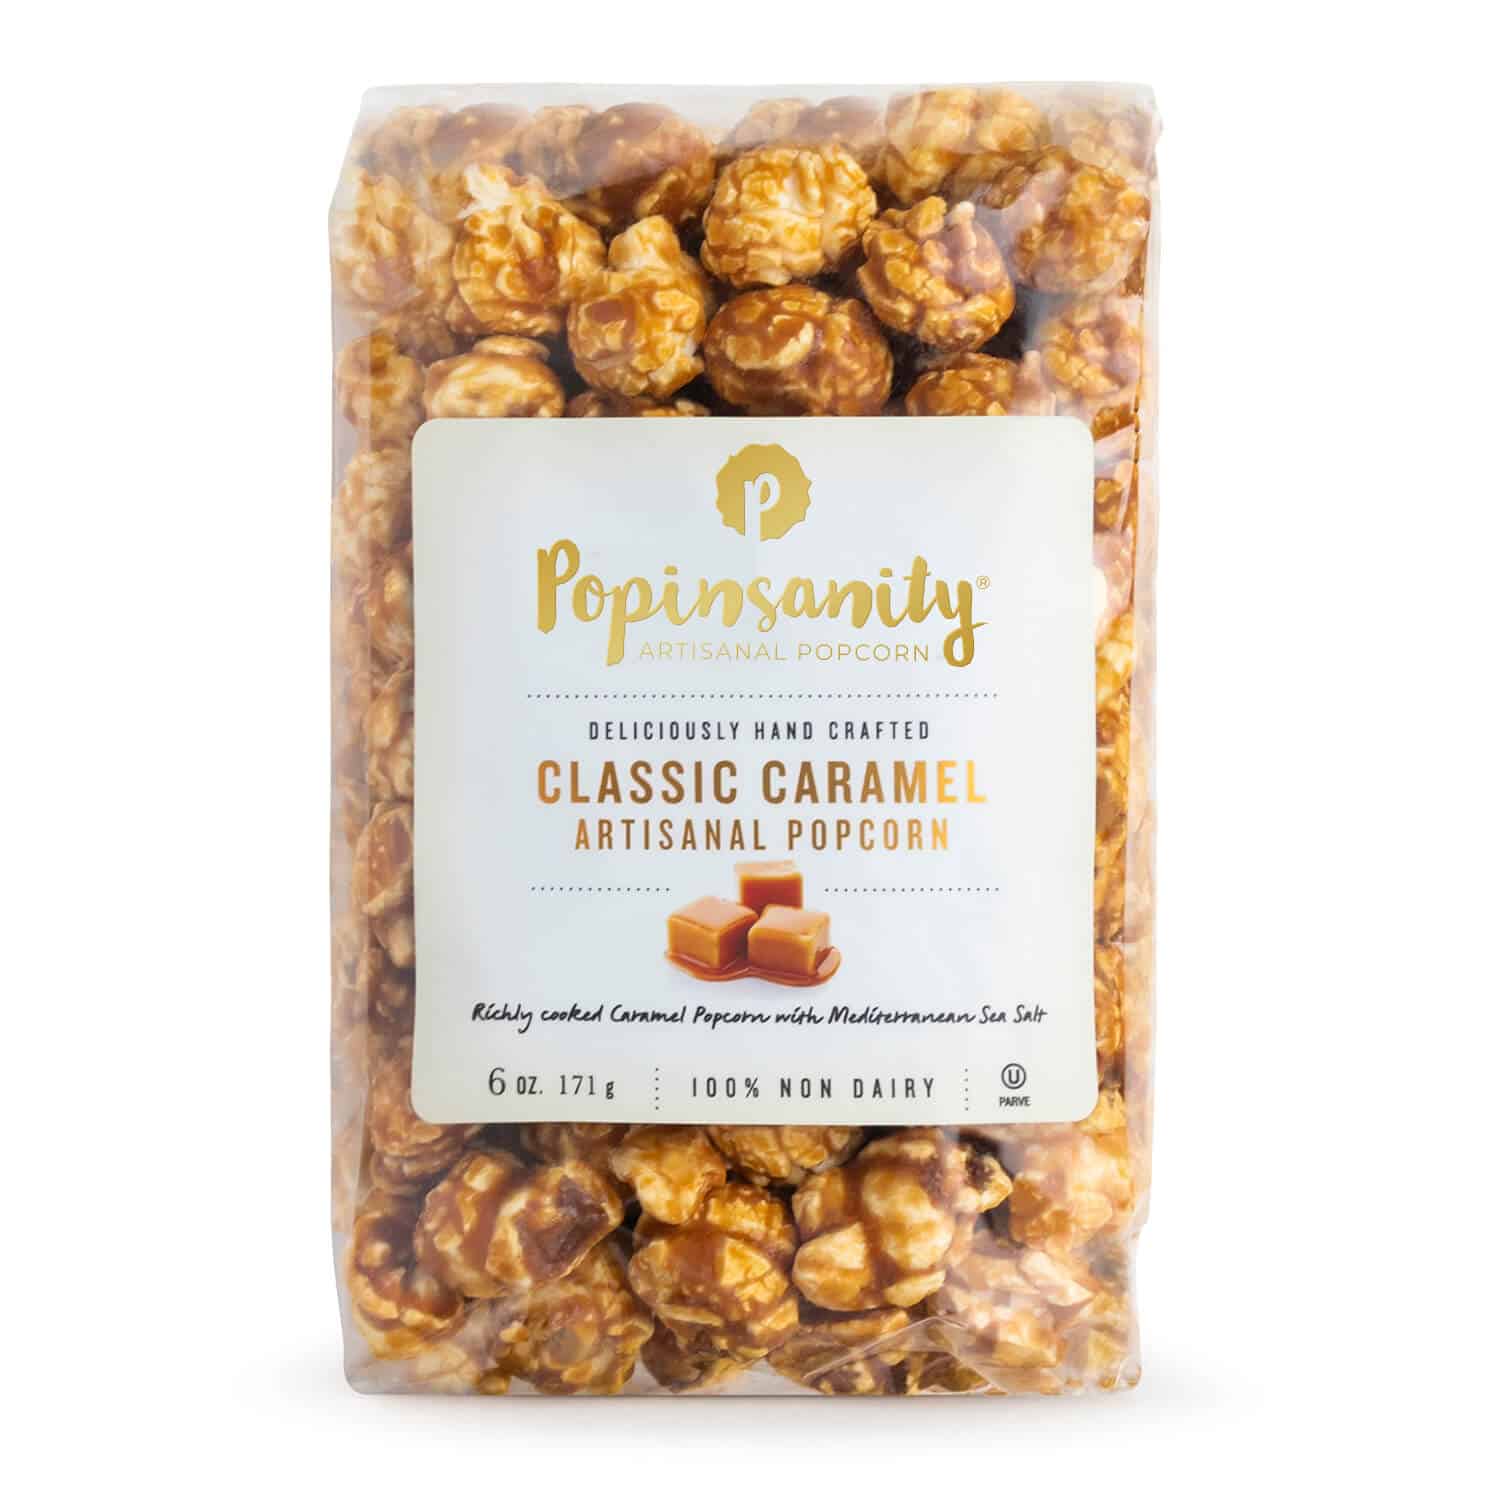 Classic Caramel Artisanal Popcorn